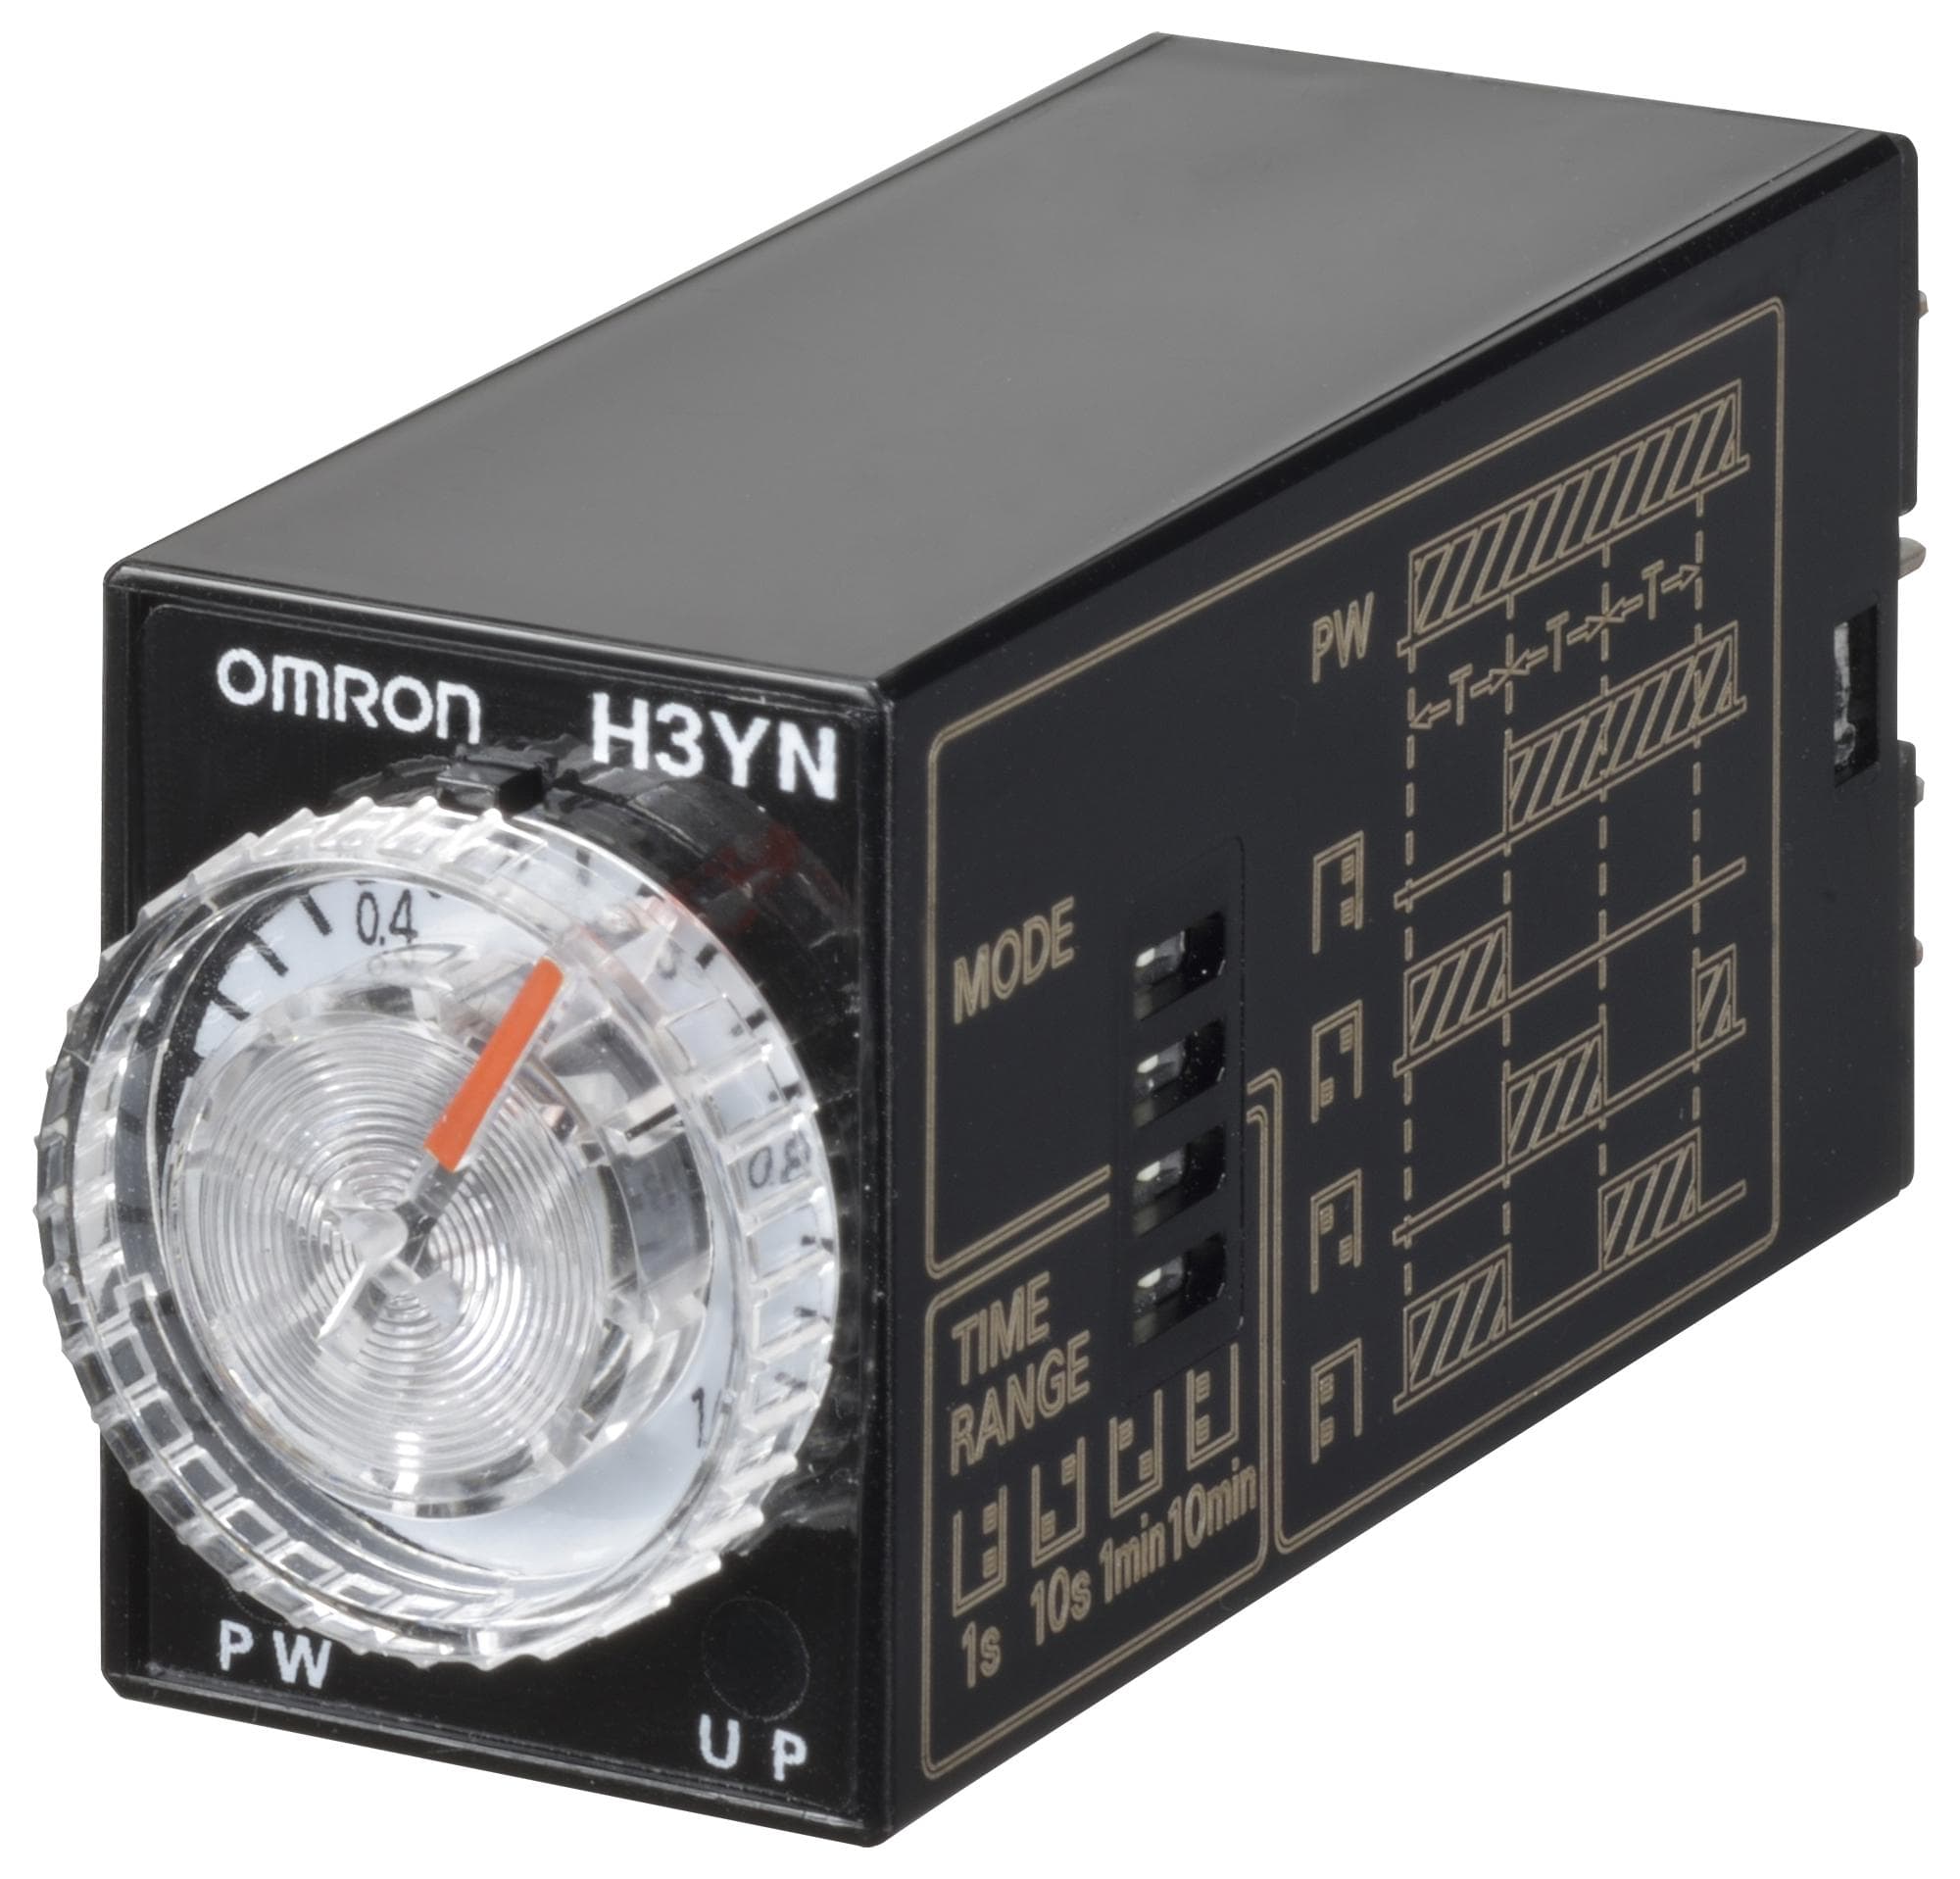 OMRON Analogue Timers H3YN-41-B AC100-120 MULTIFUNCTION TIMER, 0.1MIN-10H, 4PDT OMRON 2578965 H3YN-41-B AC100-120